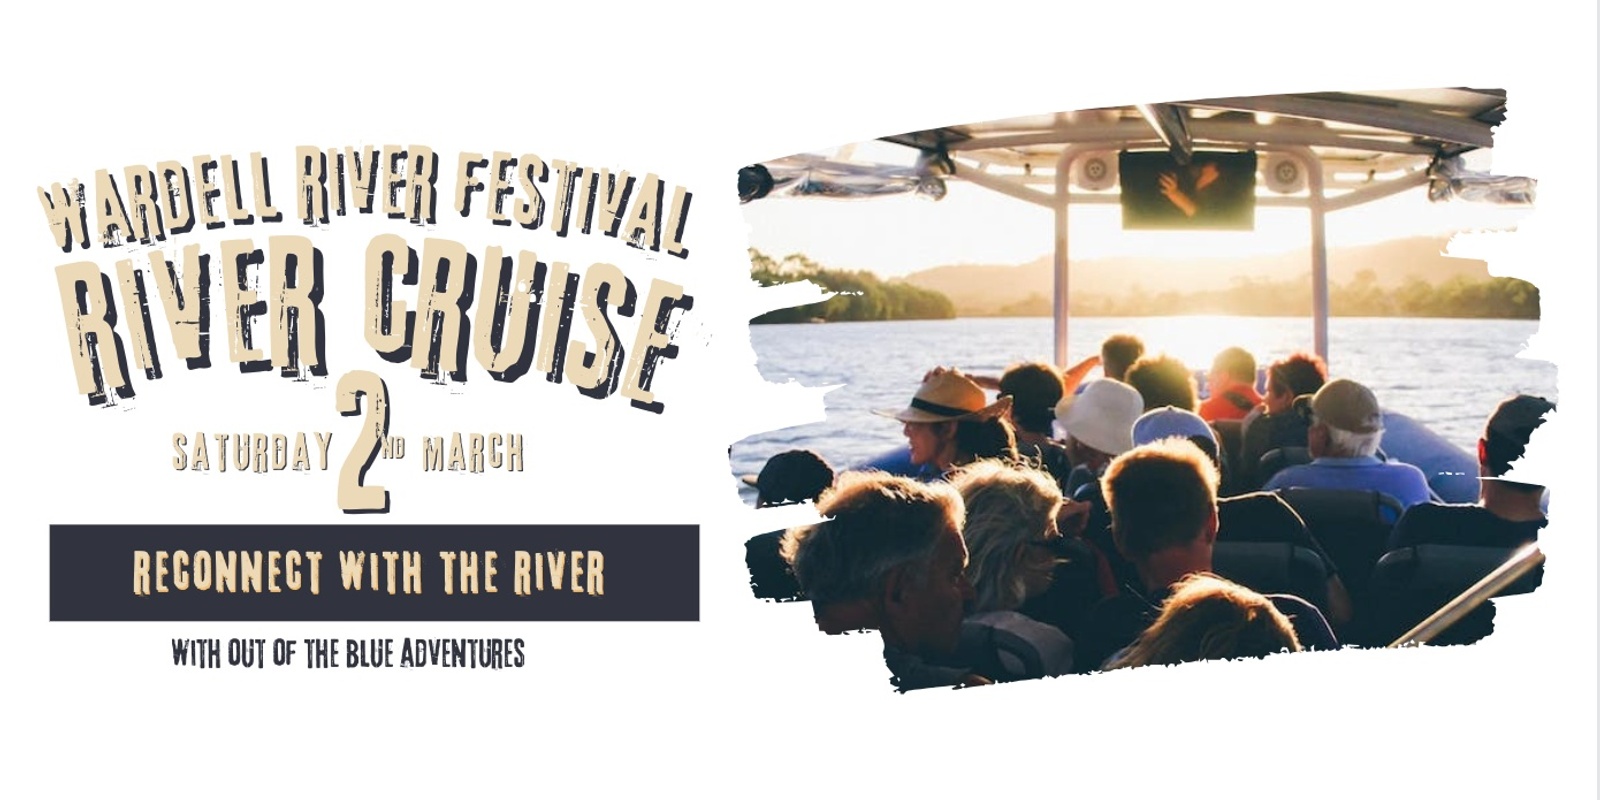 Banner image for Scenic River Cruise : Wardell River Festival